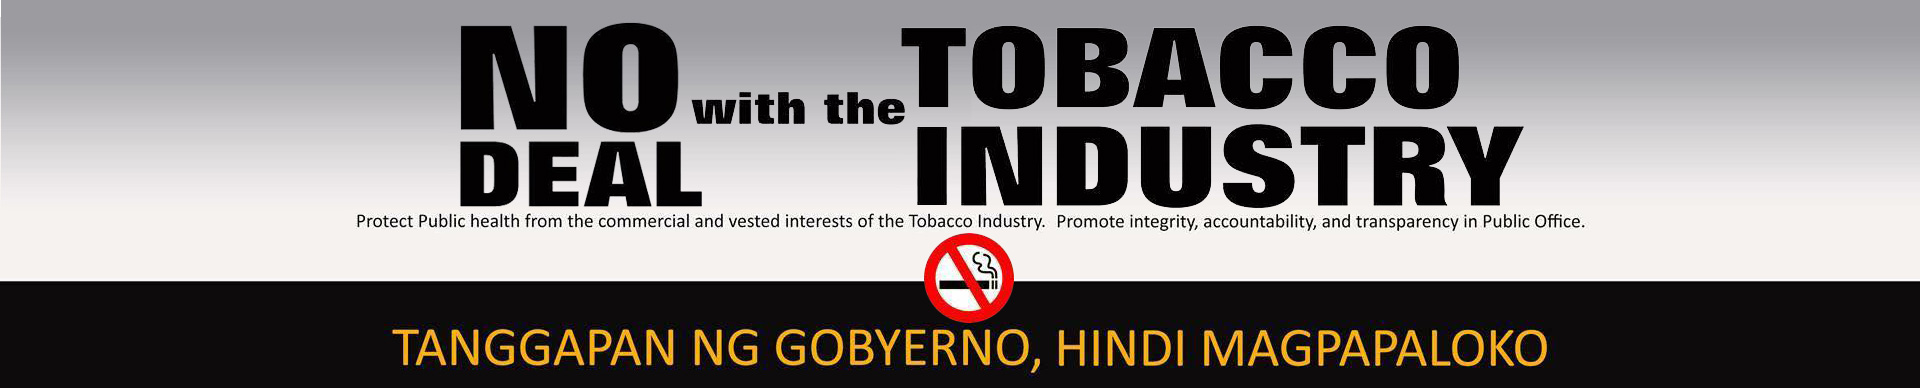 no deal tobacco industry 01